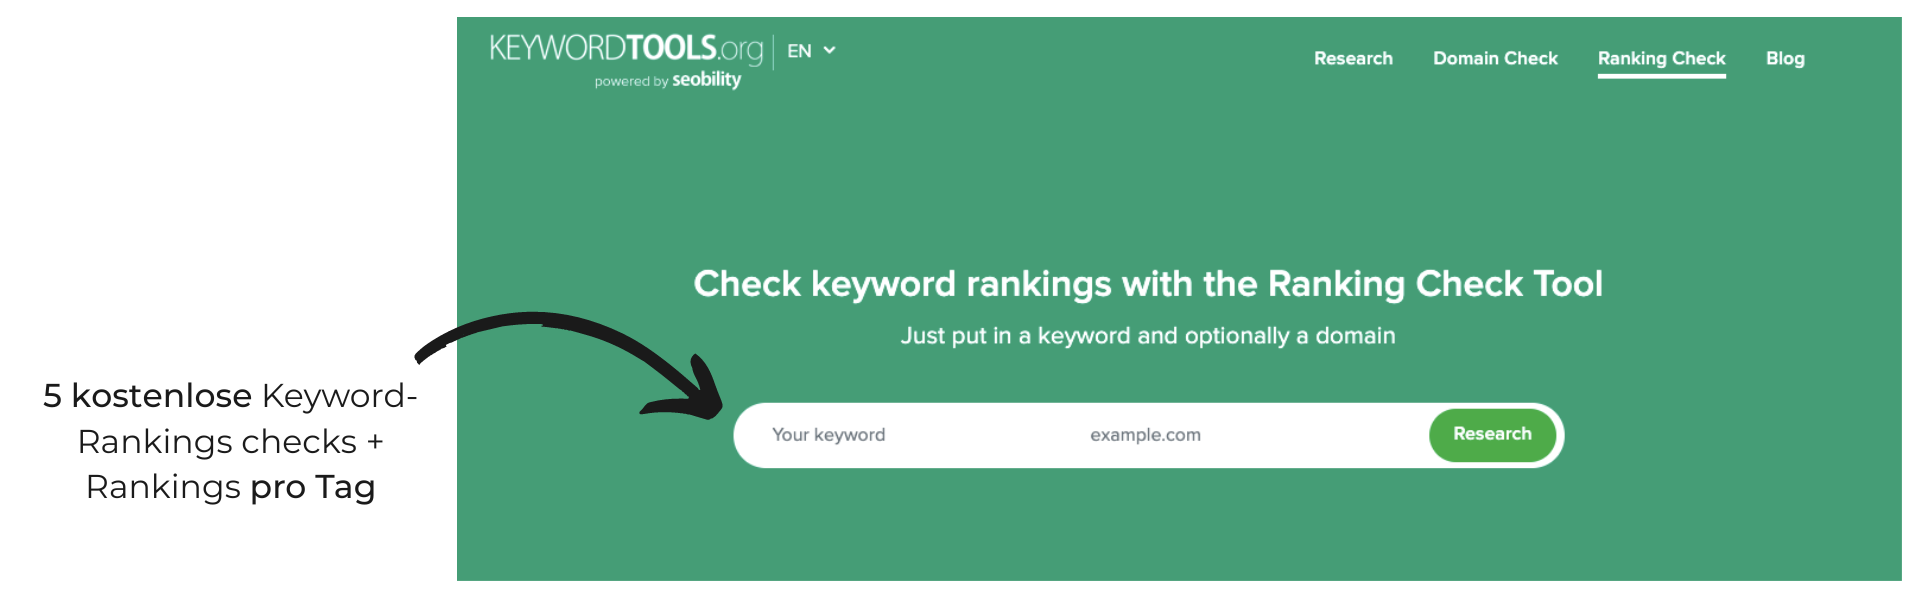 keyword-ranking-mit-domain-check